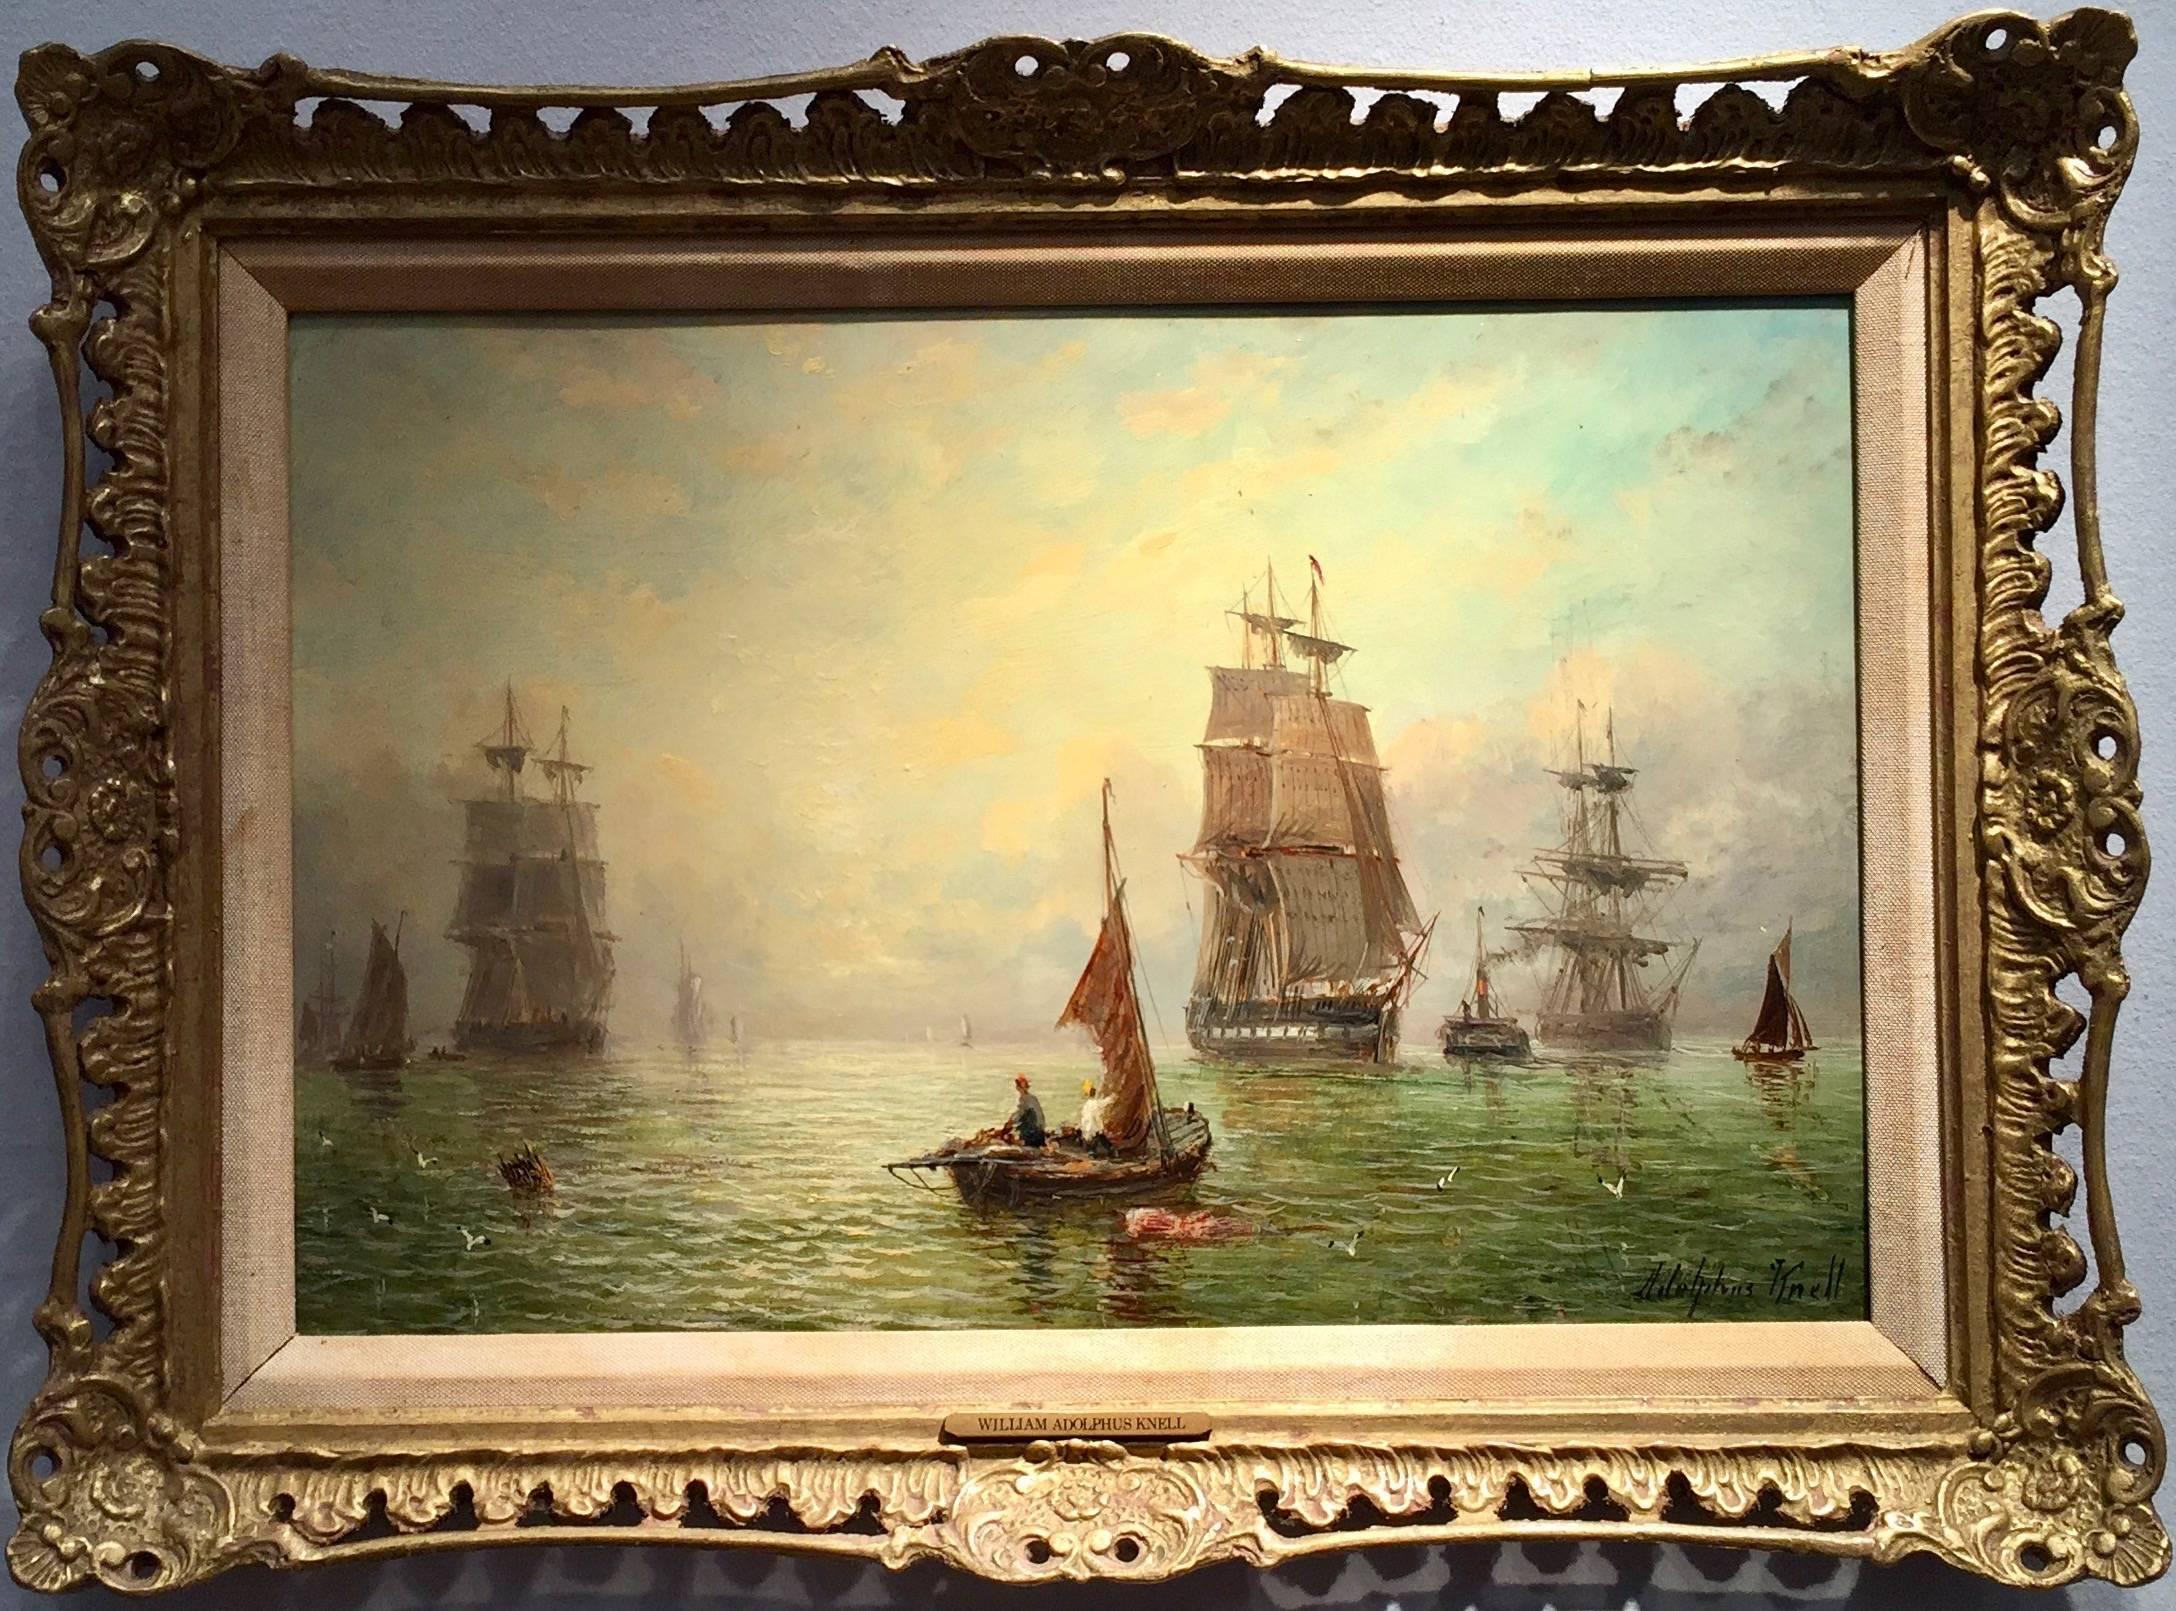 Adolphus Knell Landscape Painting - Impressionist English marine scene